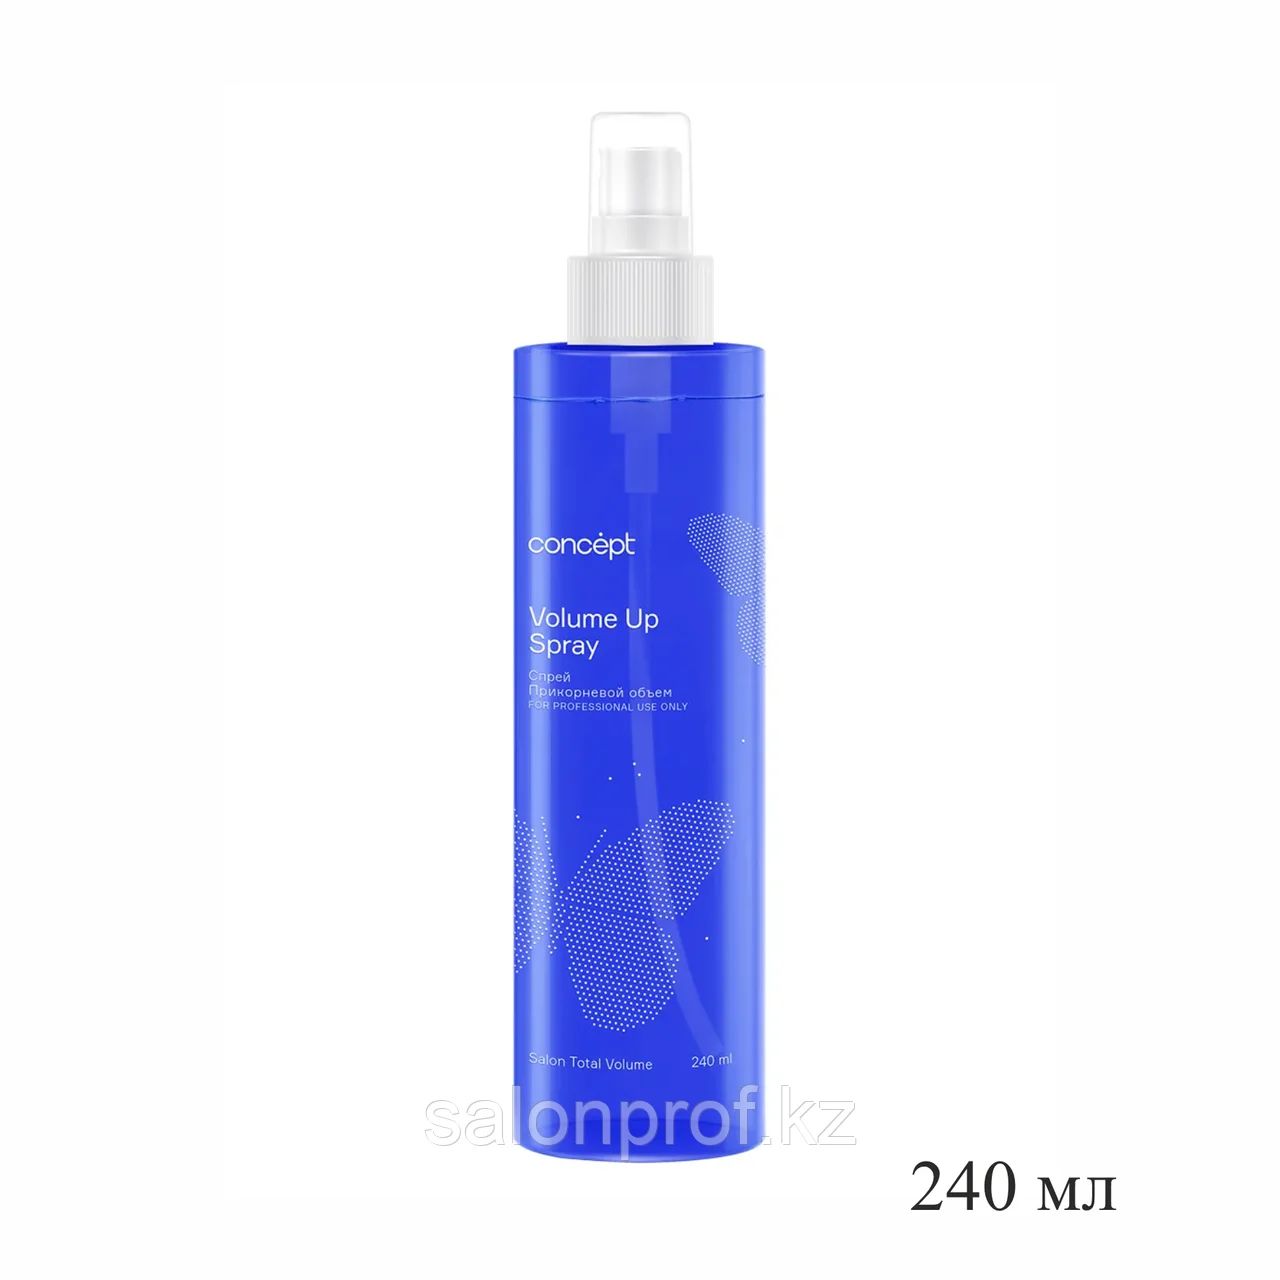 Concept Volume up spray Спрей для волос Прикорневой объем 240 мл